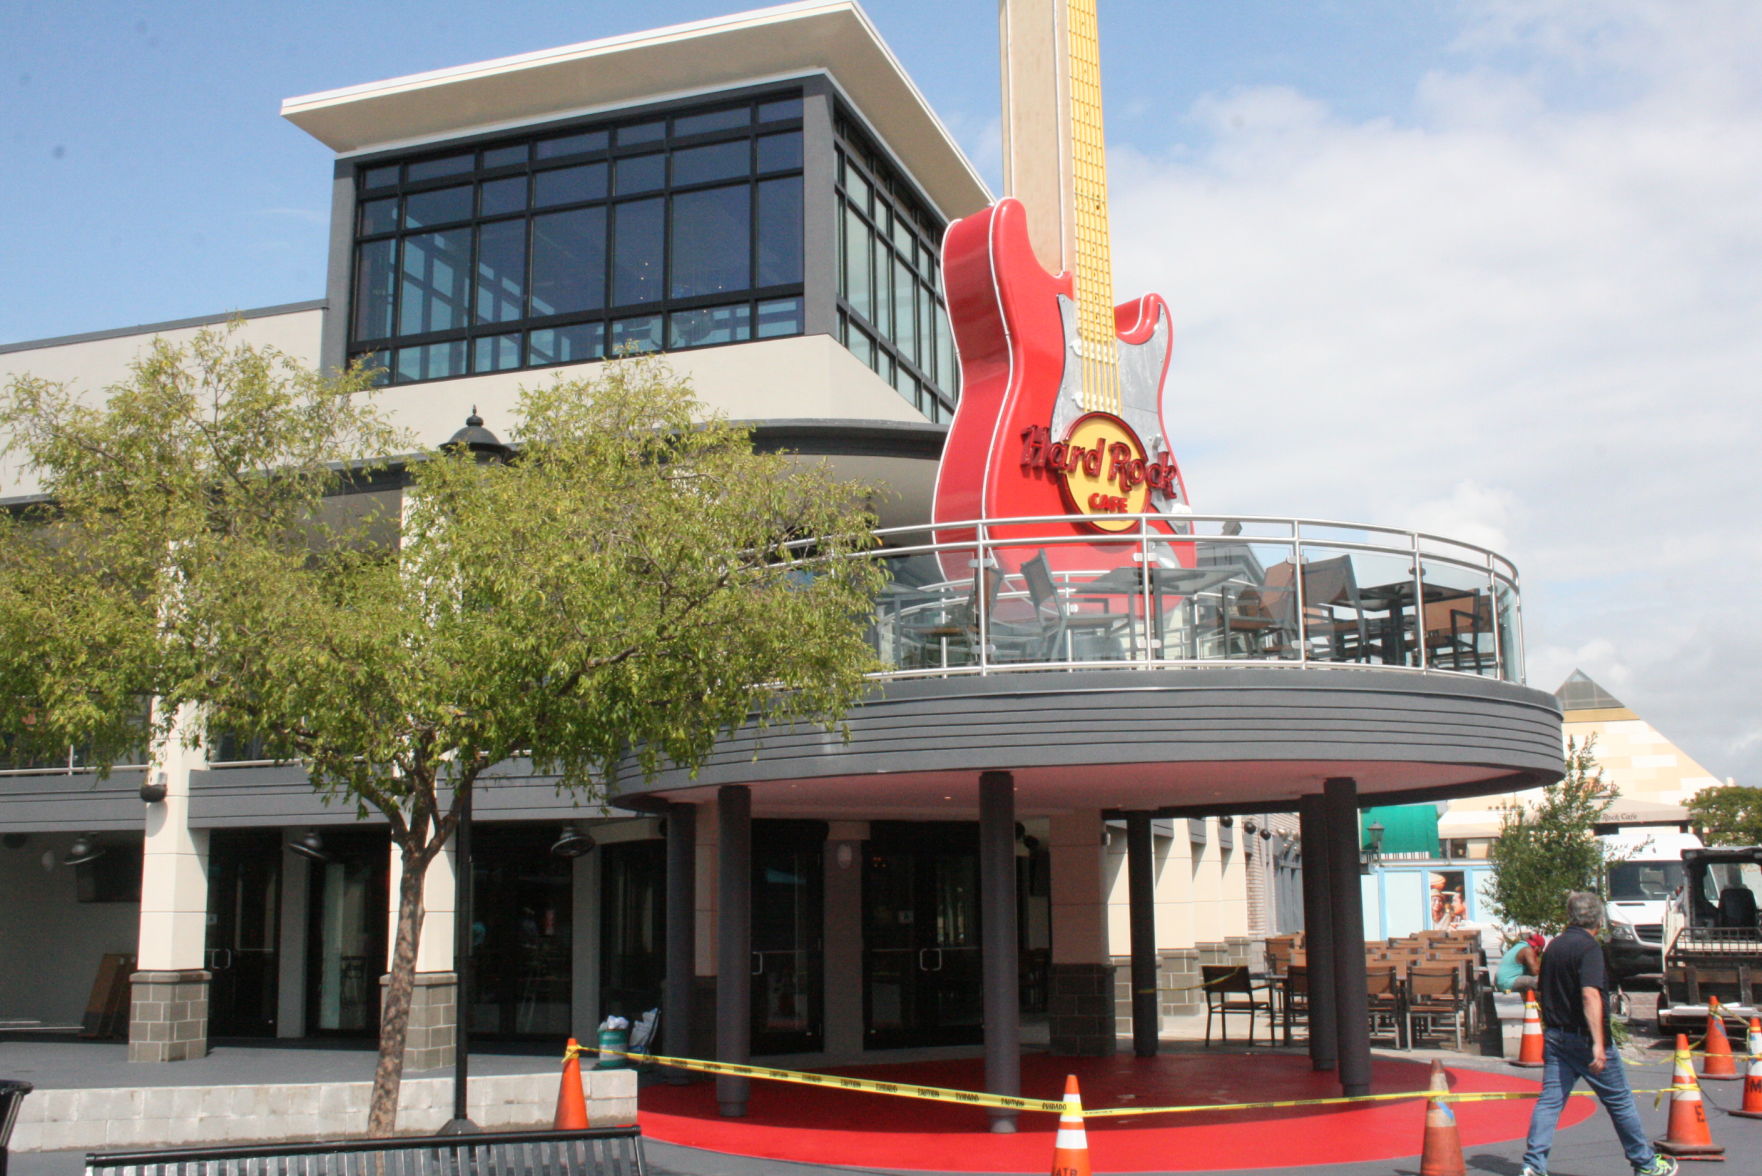 New Hard Rock Café slated to open next week | Myrtle Beach